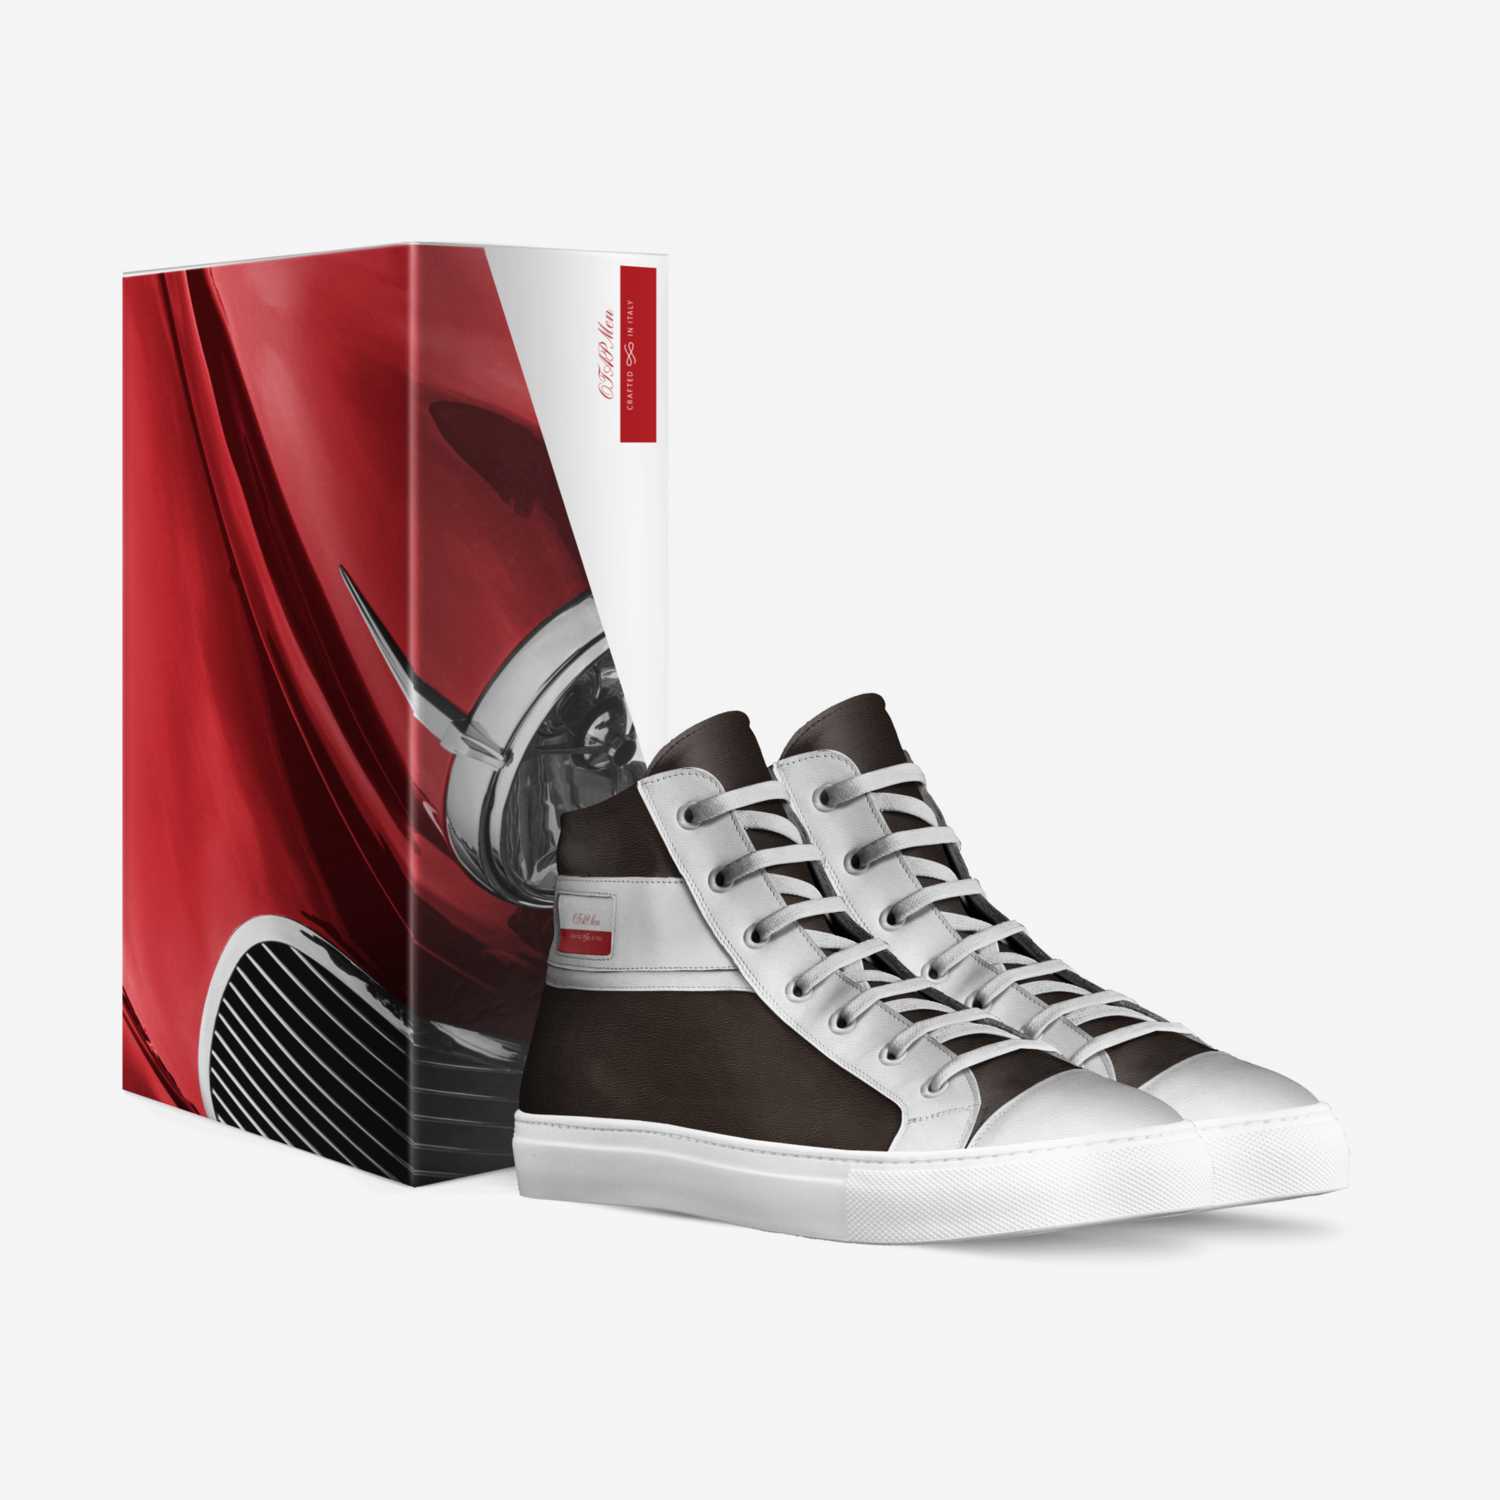 OTAPMen custom made in Italy shoes by Onisha Robitson | Box view